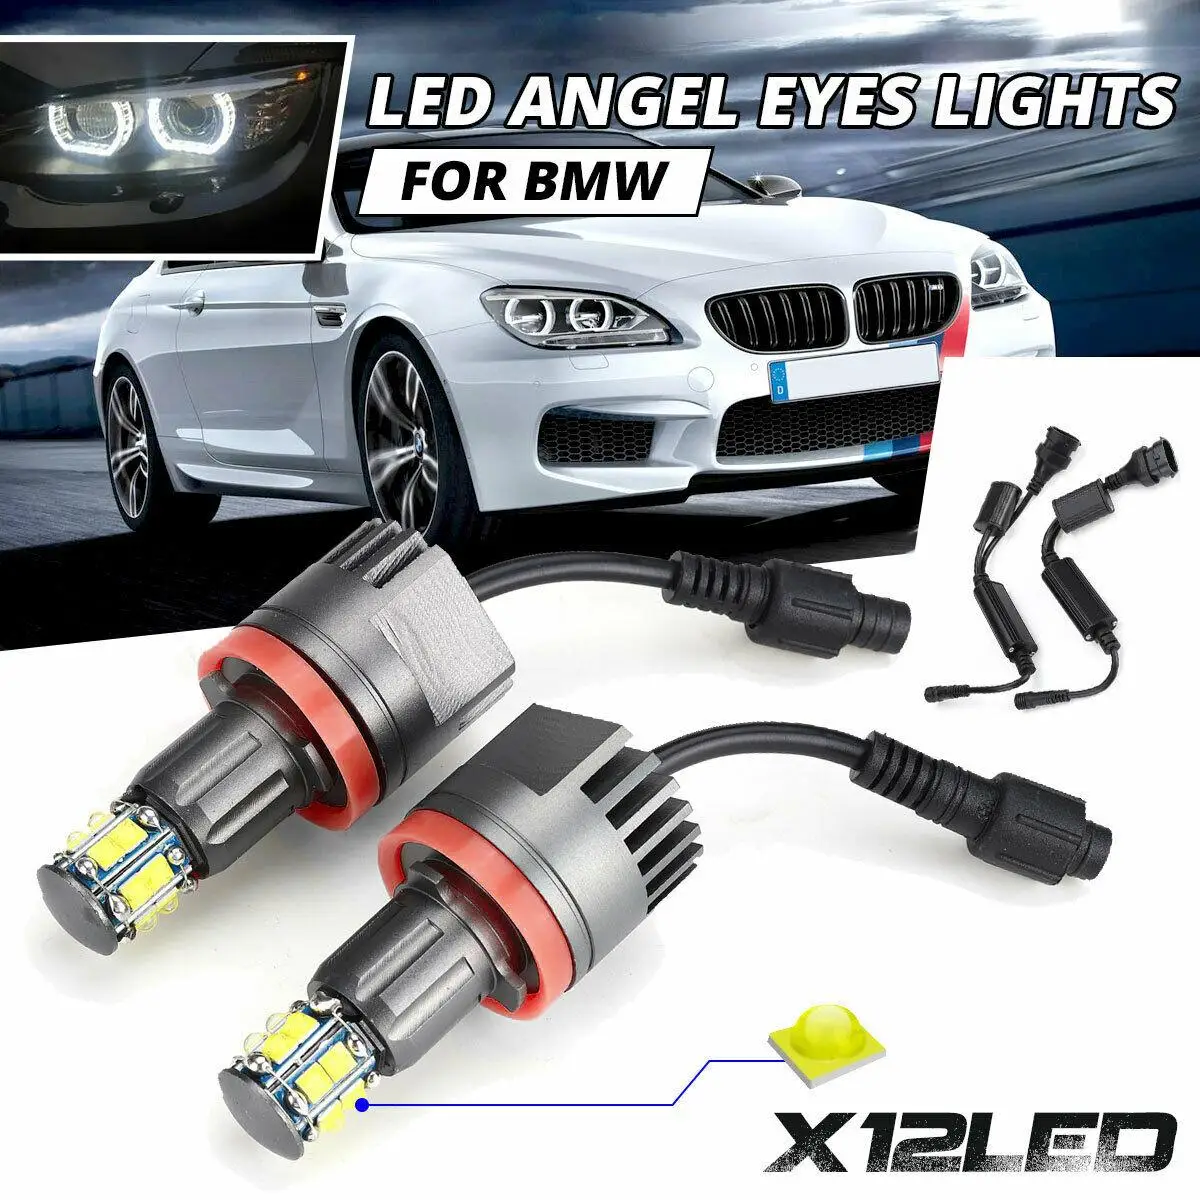 

2x 240W H8 Angel Eyes LED Halo Ring Light Bulbs 6500K White For BMW E90 E91 E92 E60 E61 E63 E64 F01 F02 E84 E70 E71 E89